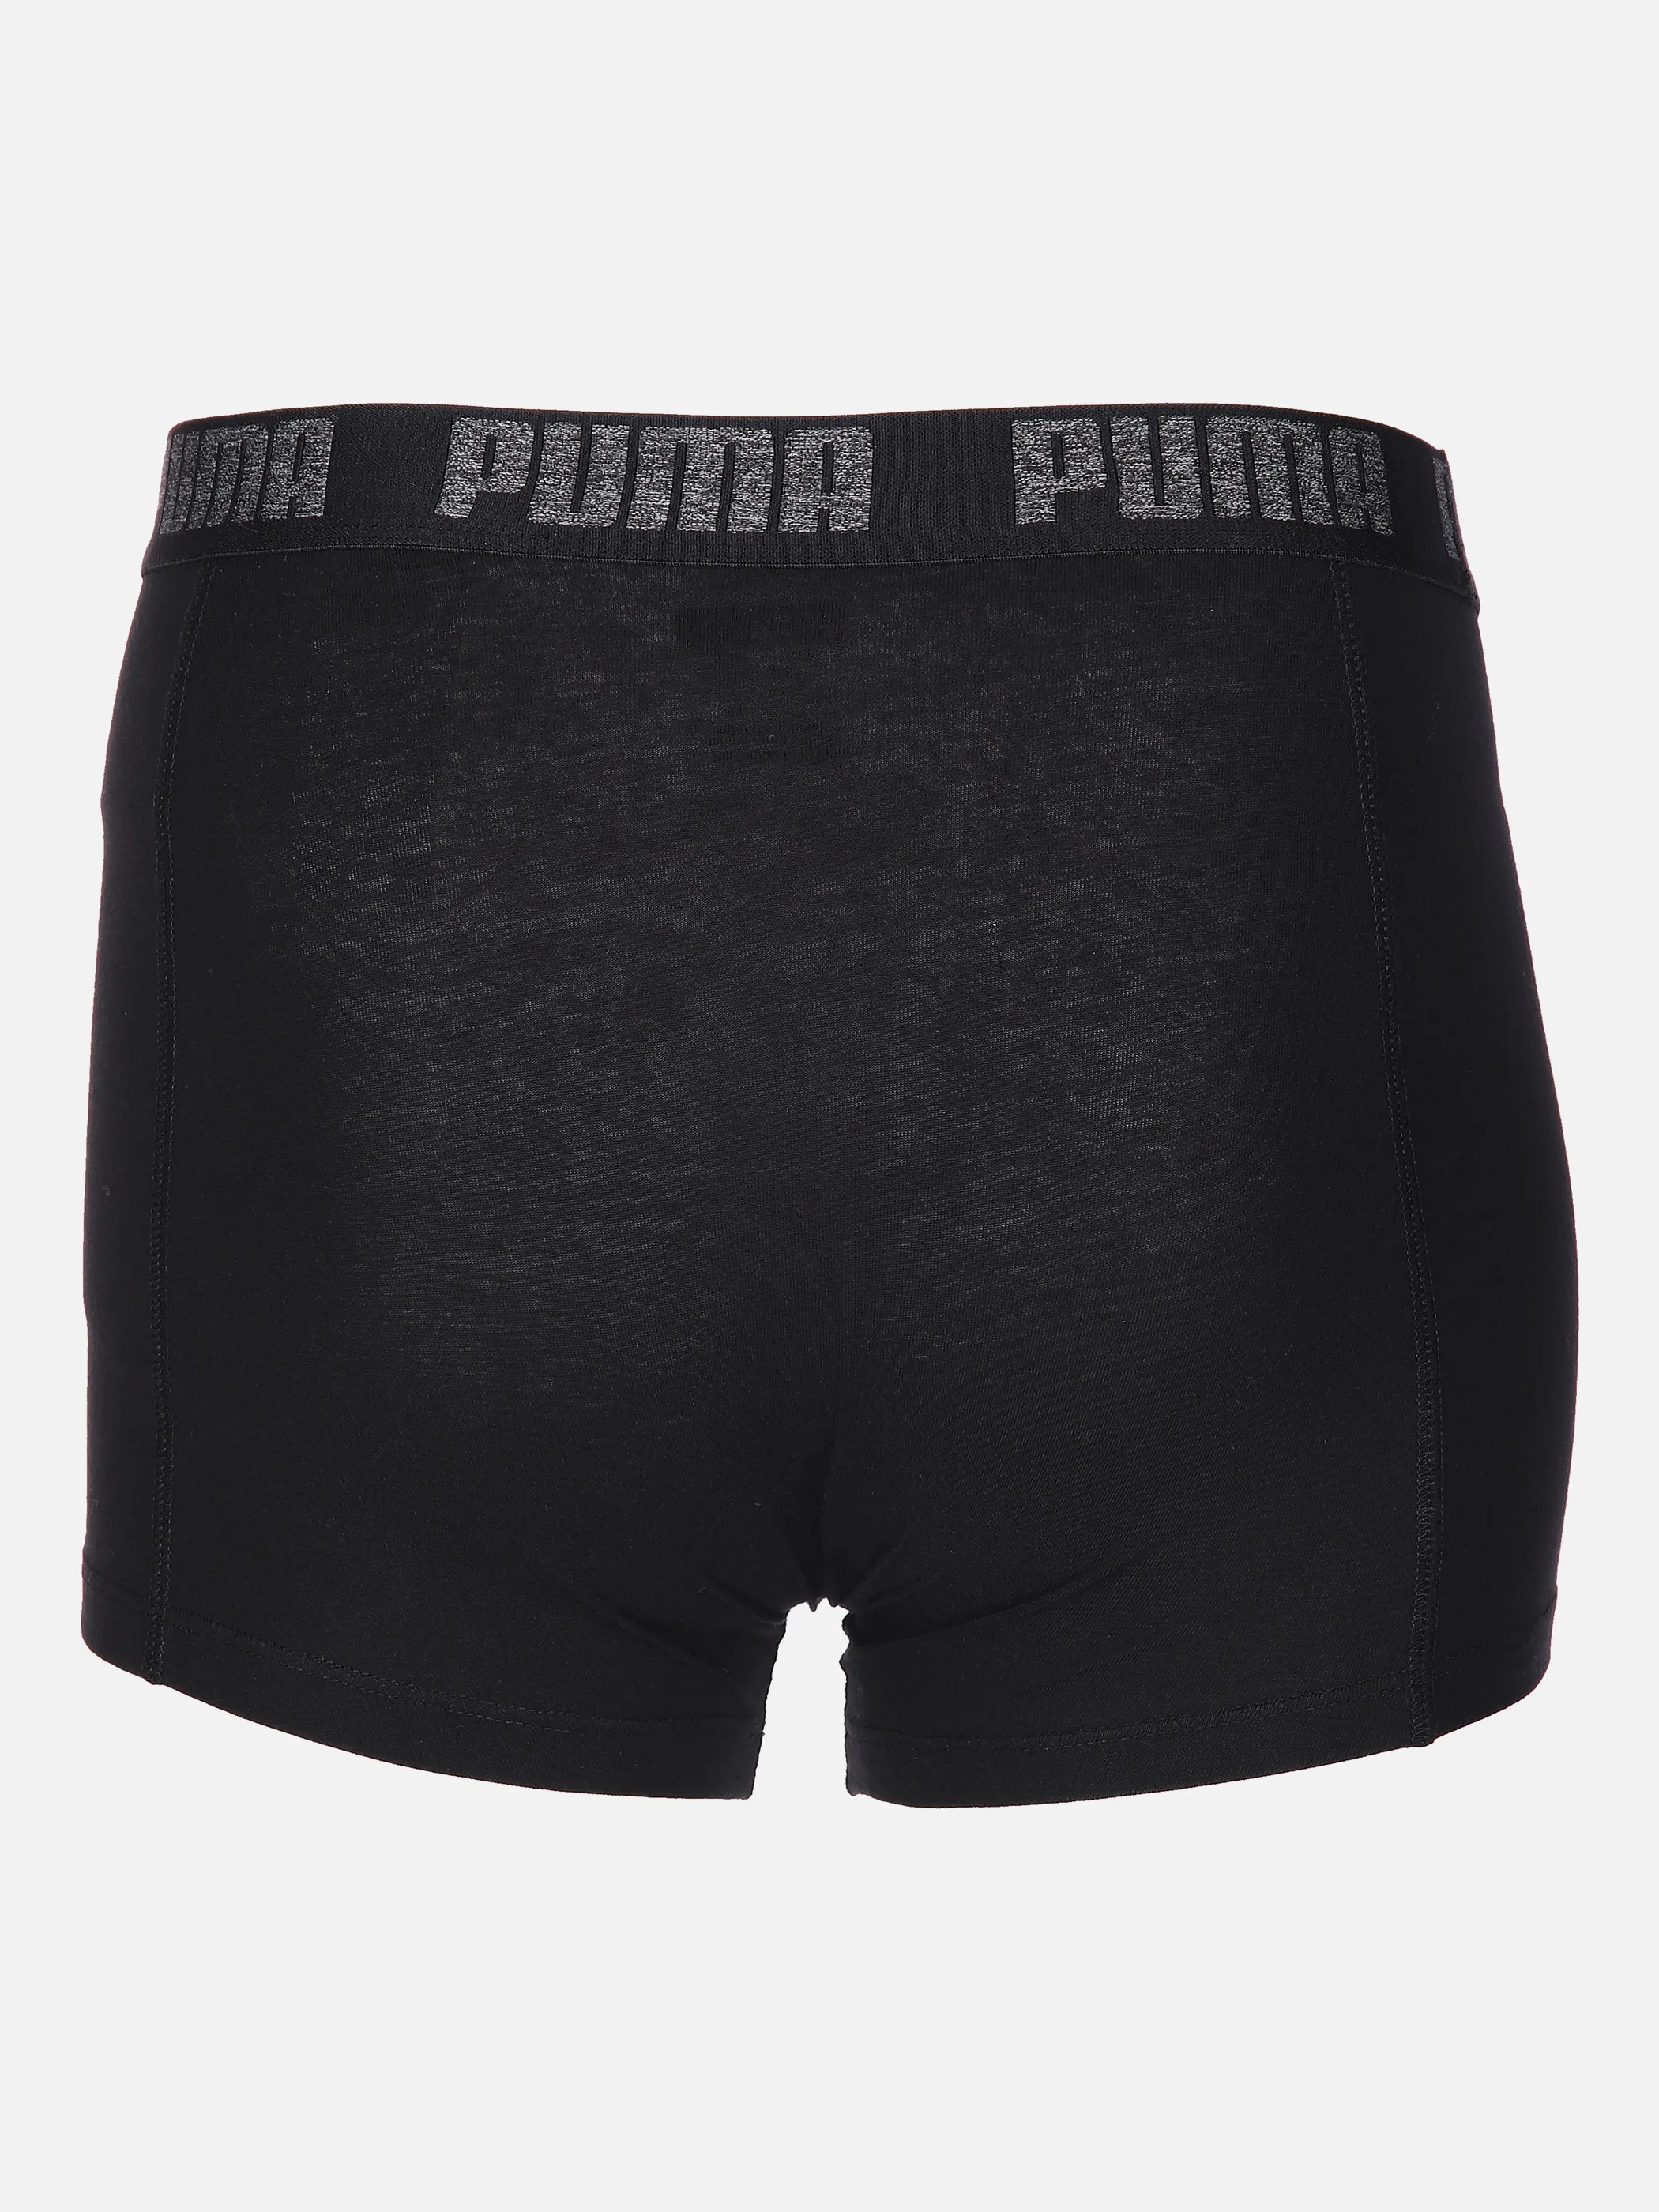 Puma Puma Basic Boxer 2er Pack Schwarz 762020 BLACK/BLAC 2